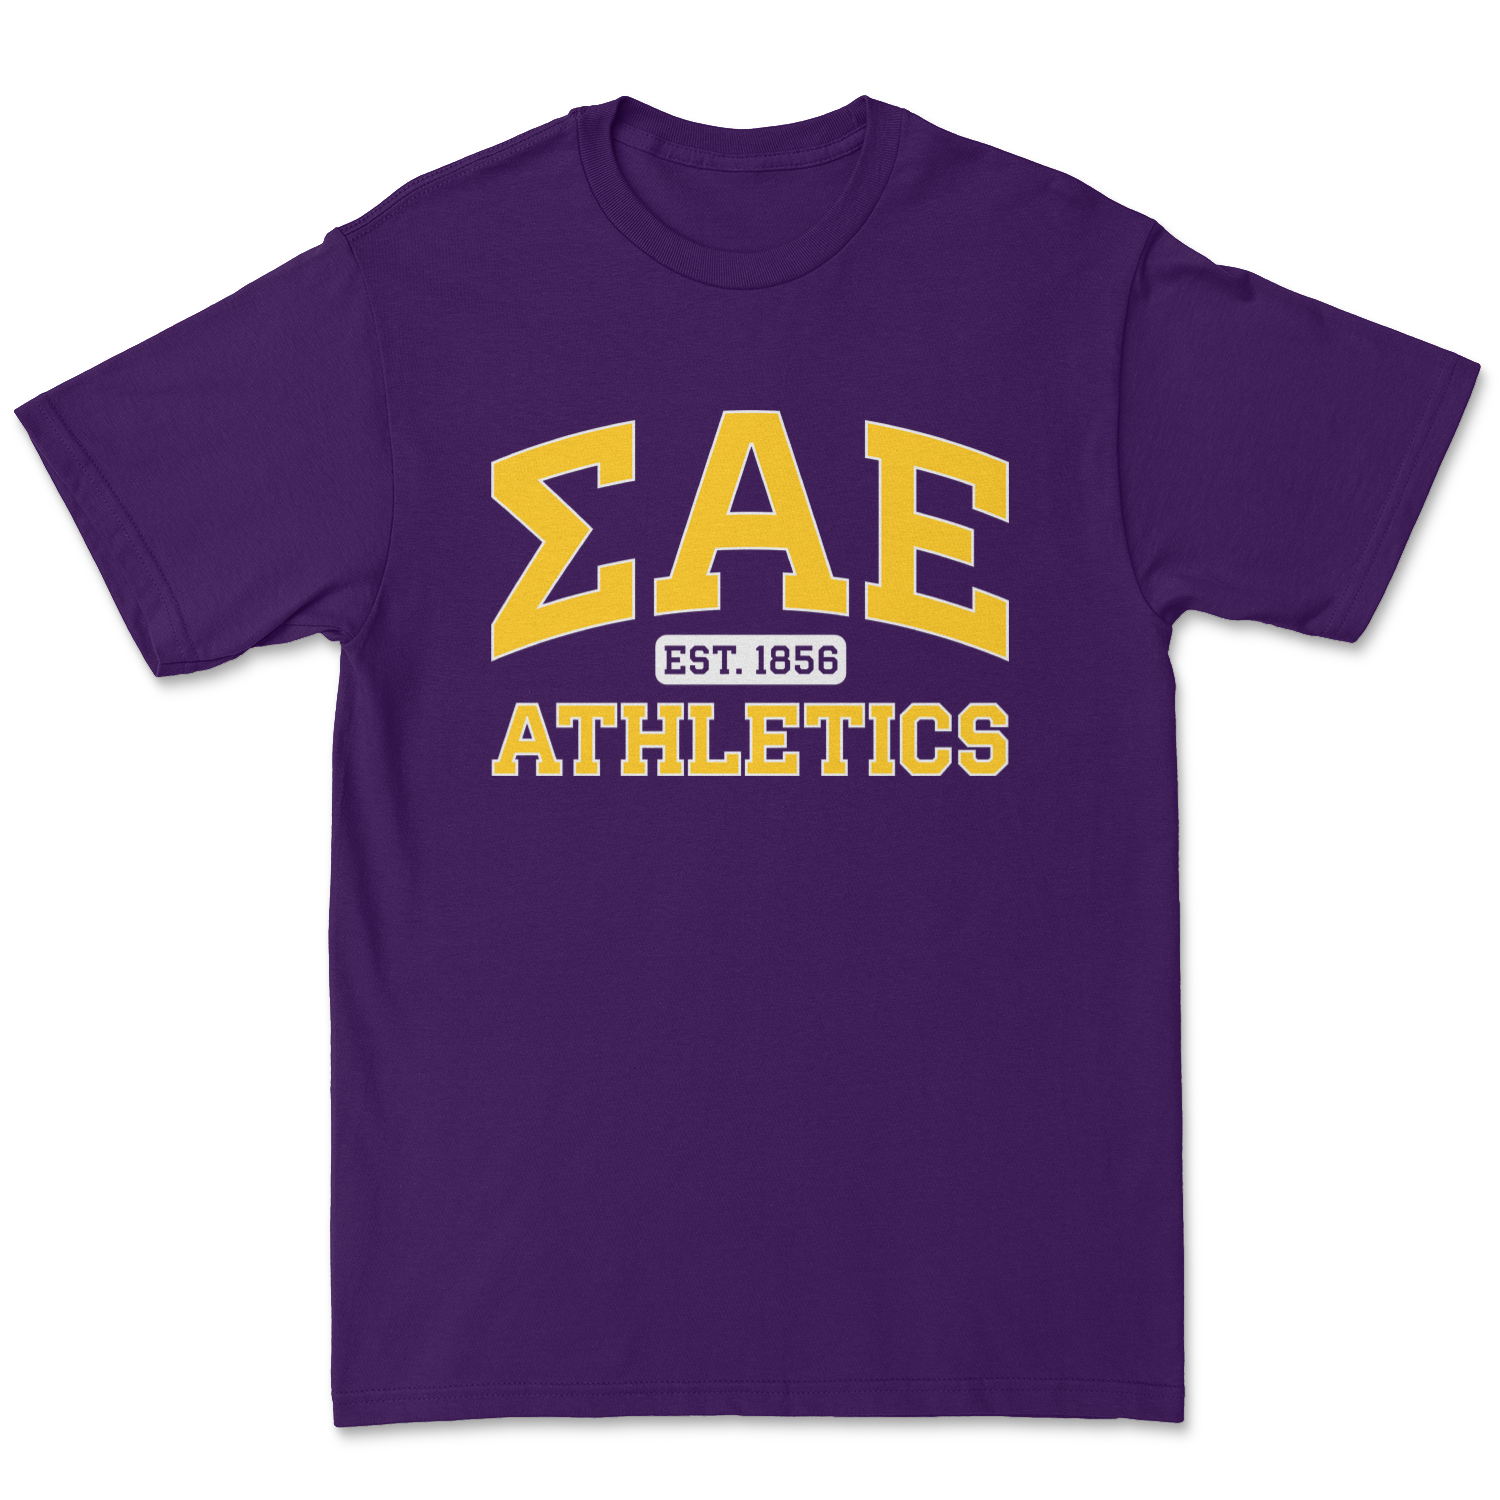 SAE College T-Shirt